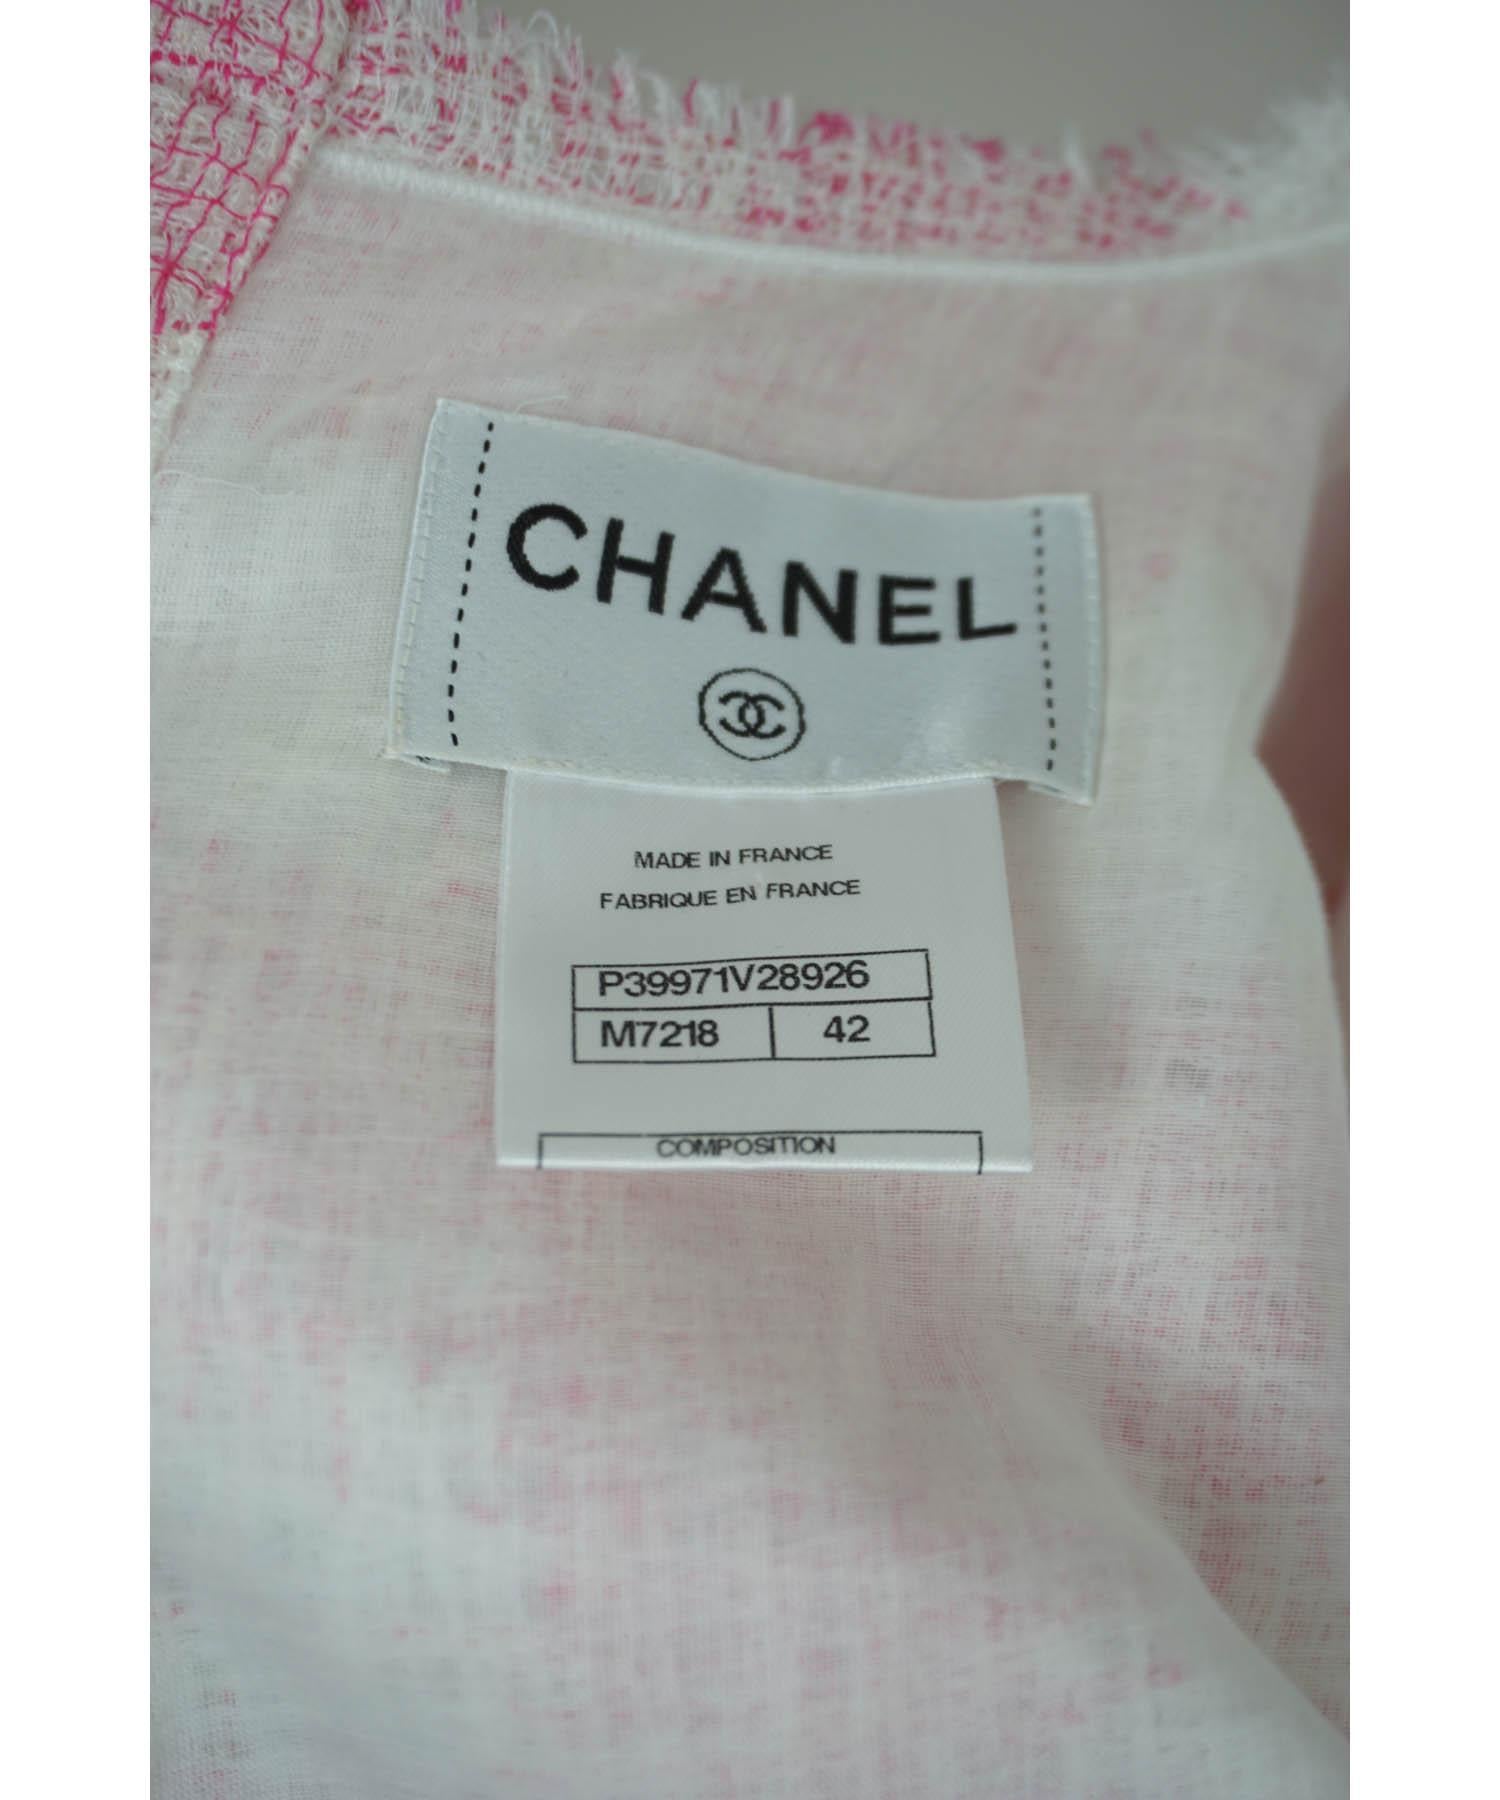 Chanel Gingham Tweed Sheath Dress 42/10 2011 For Sale 4